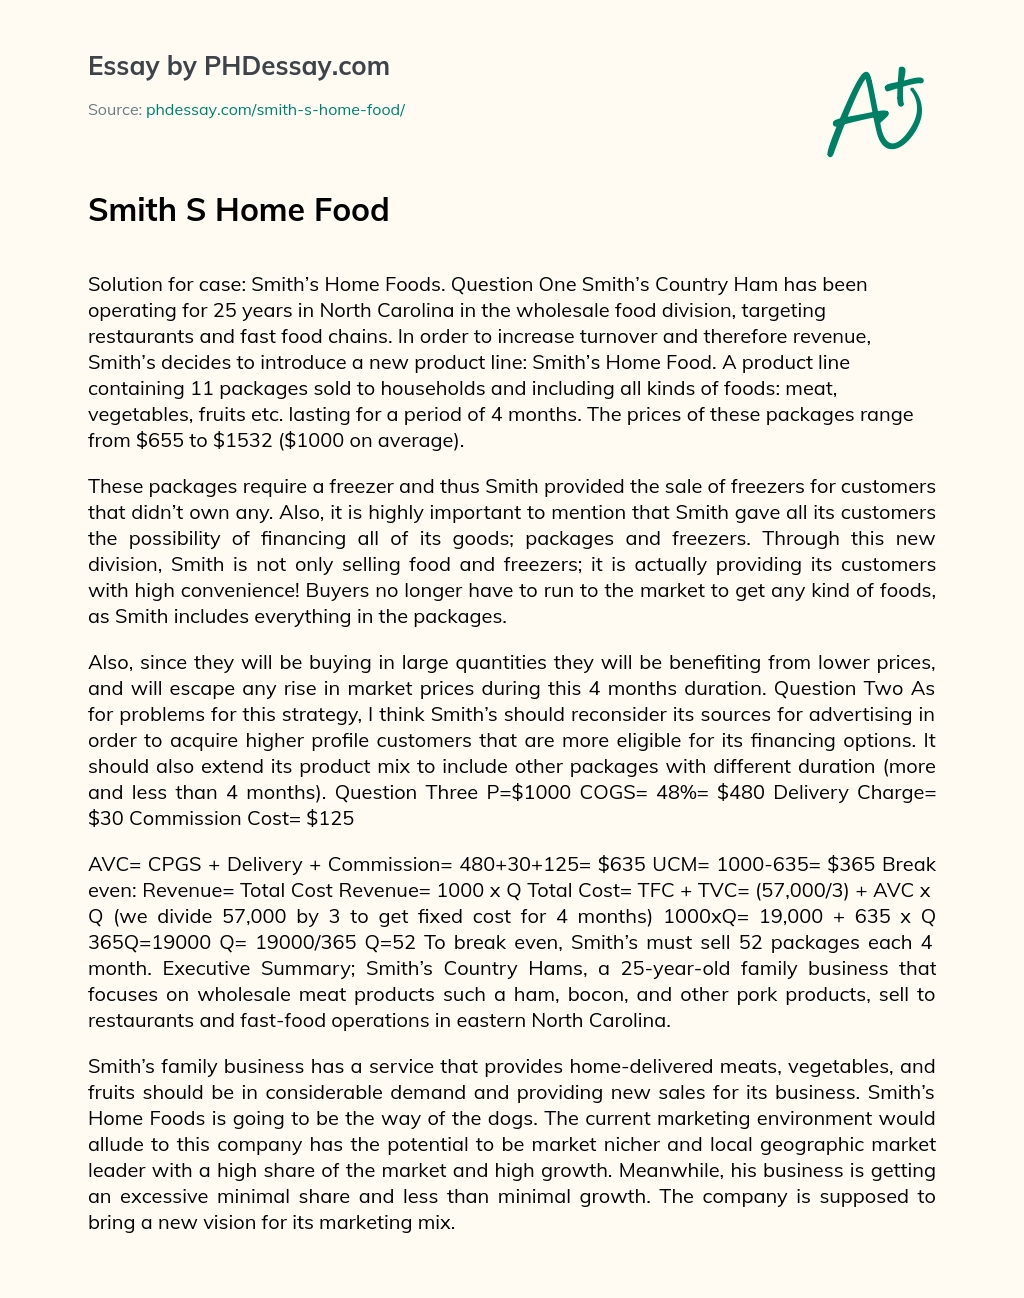 Smith S Home Food essay